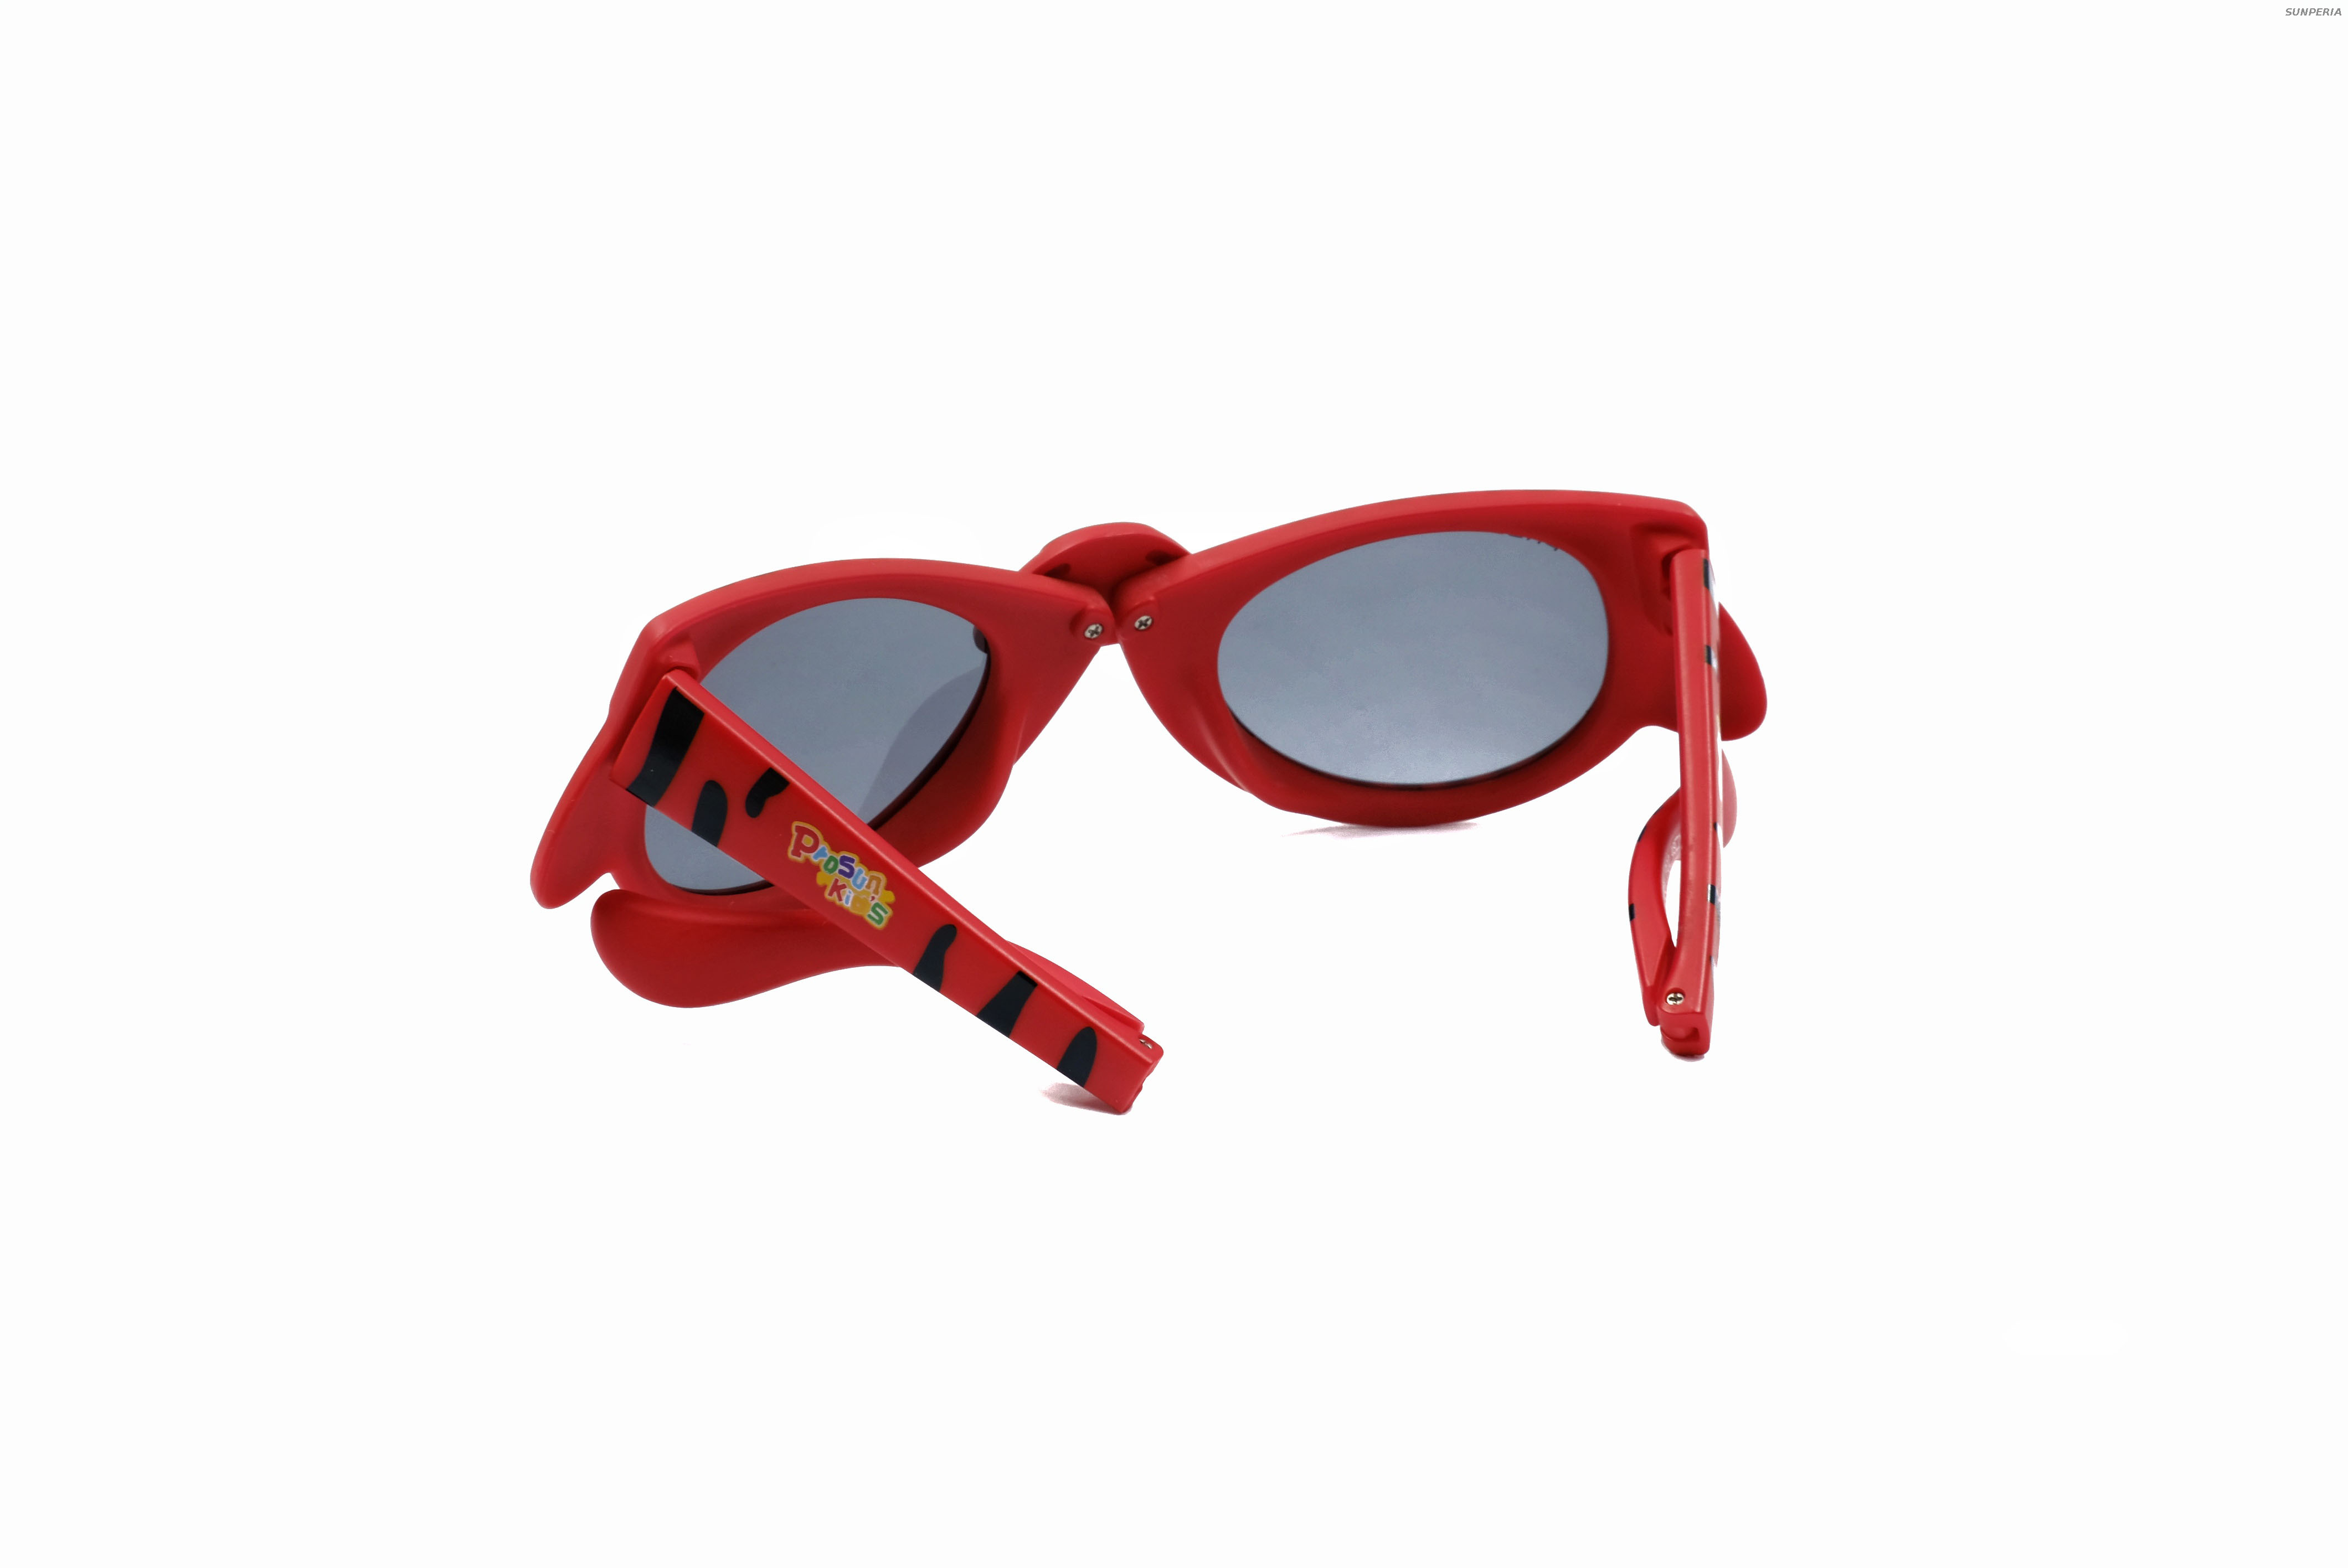 Gensun Eyewear Kids Eyeglasses Boy Girls Sunglasses Polarized Lenses Protect Eyes